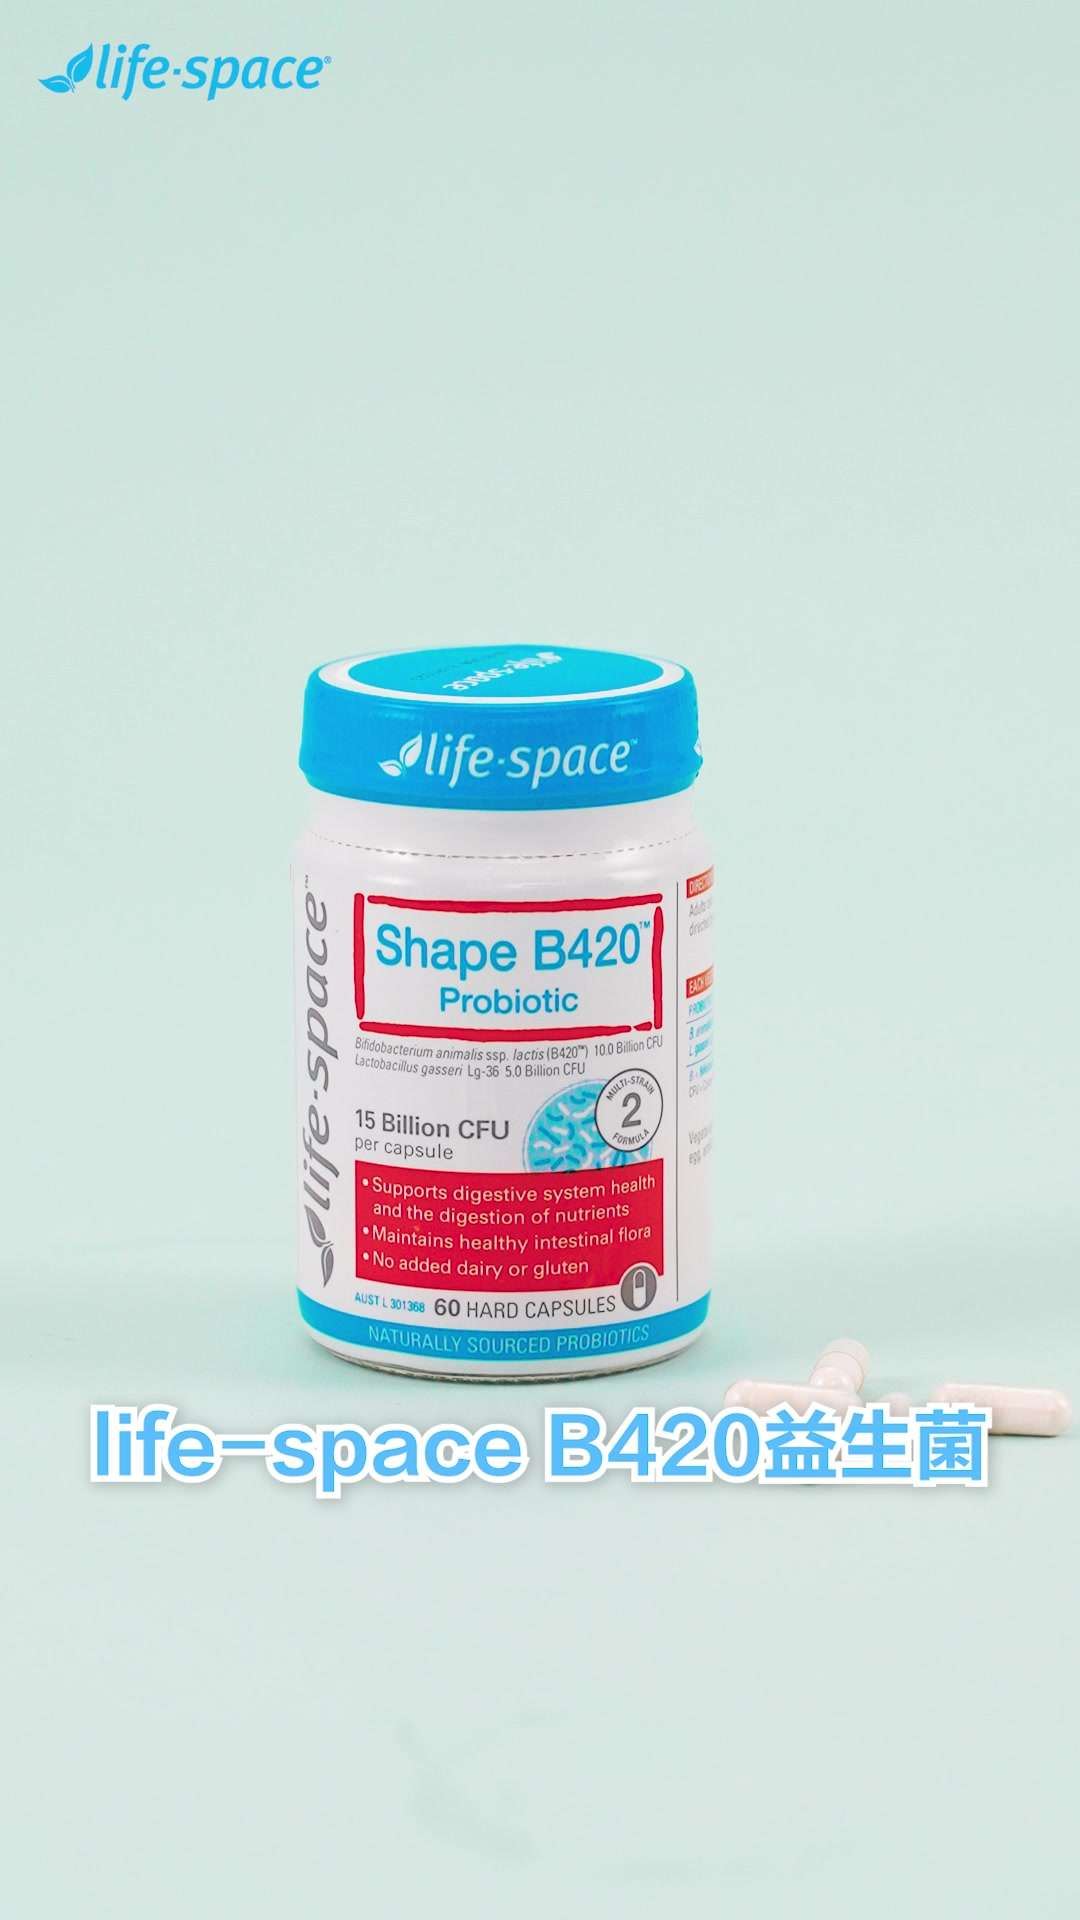 life-space B420益生菌信息流 胶囊纯产品